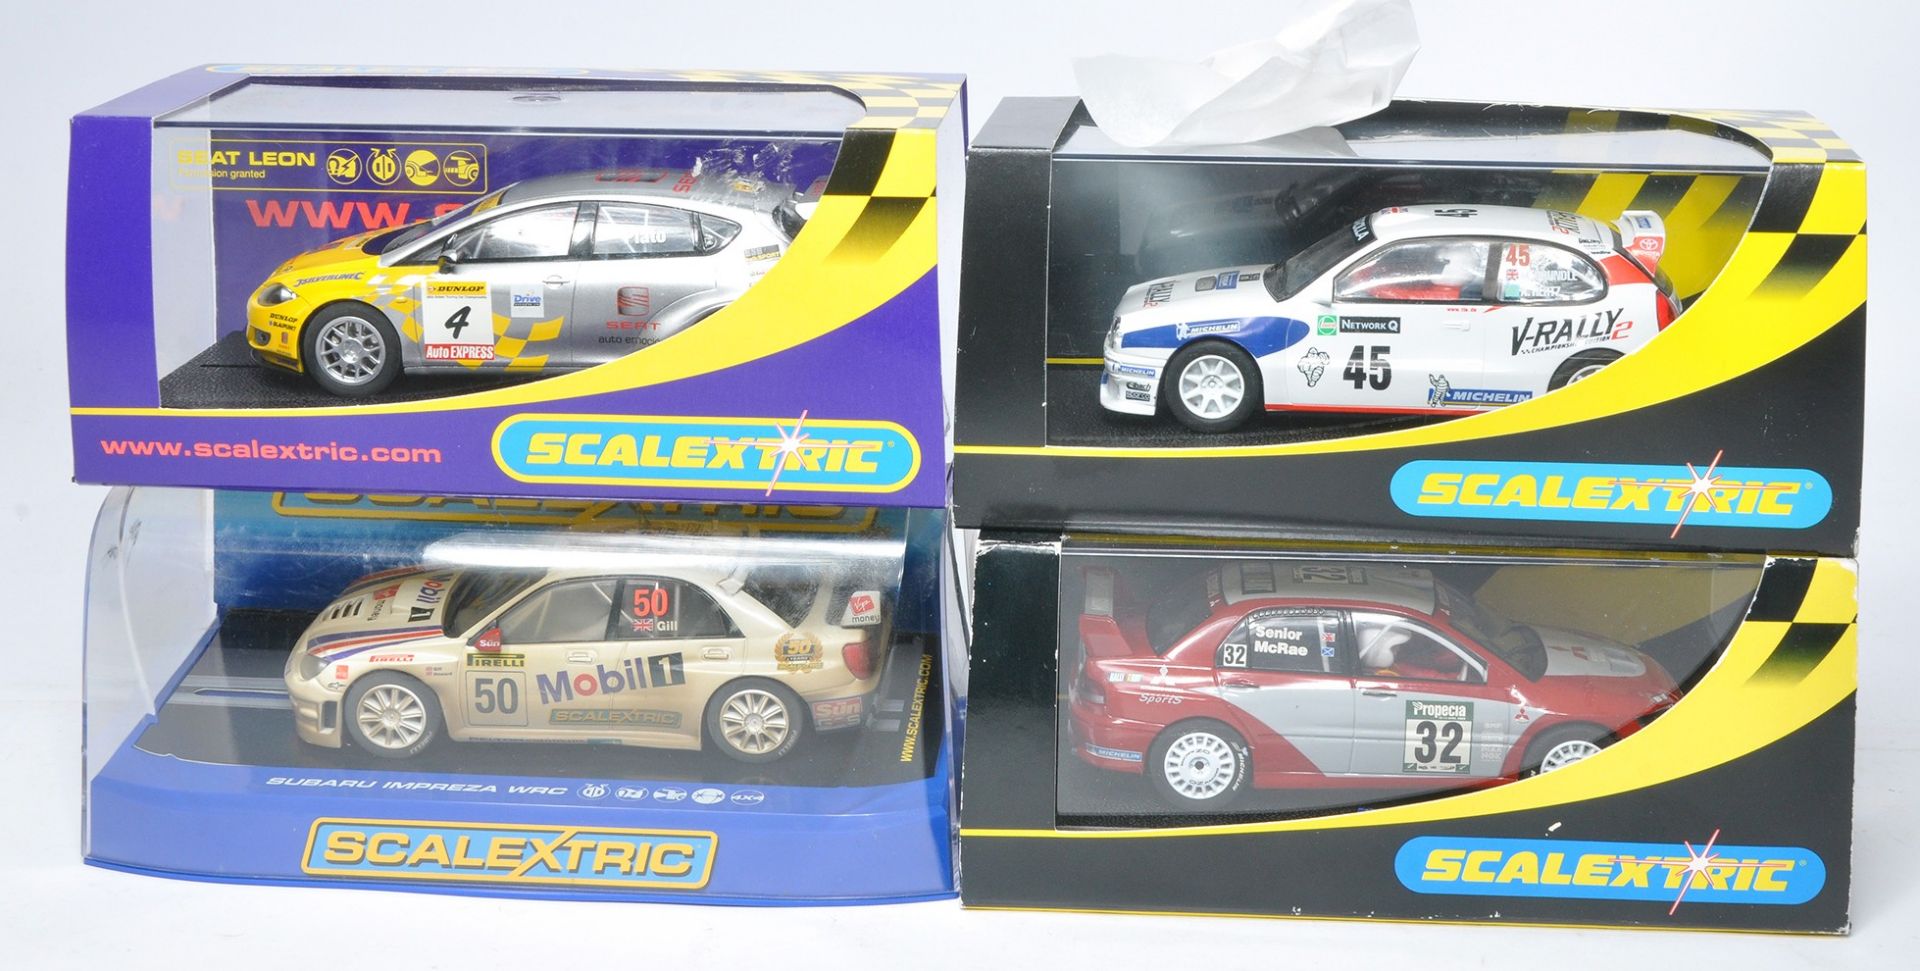 Scalextric slot car issues comprising Subaru Impreza WRC, Seat Leon BTCC, Mitsubishi Lancer plus